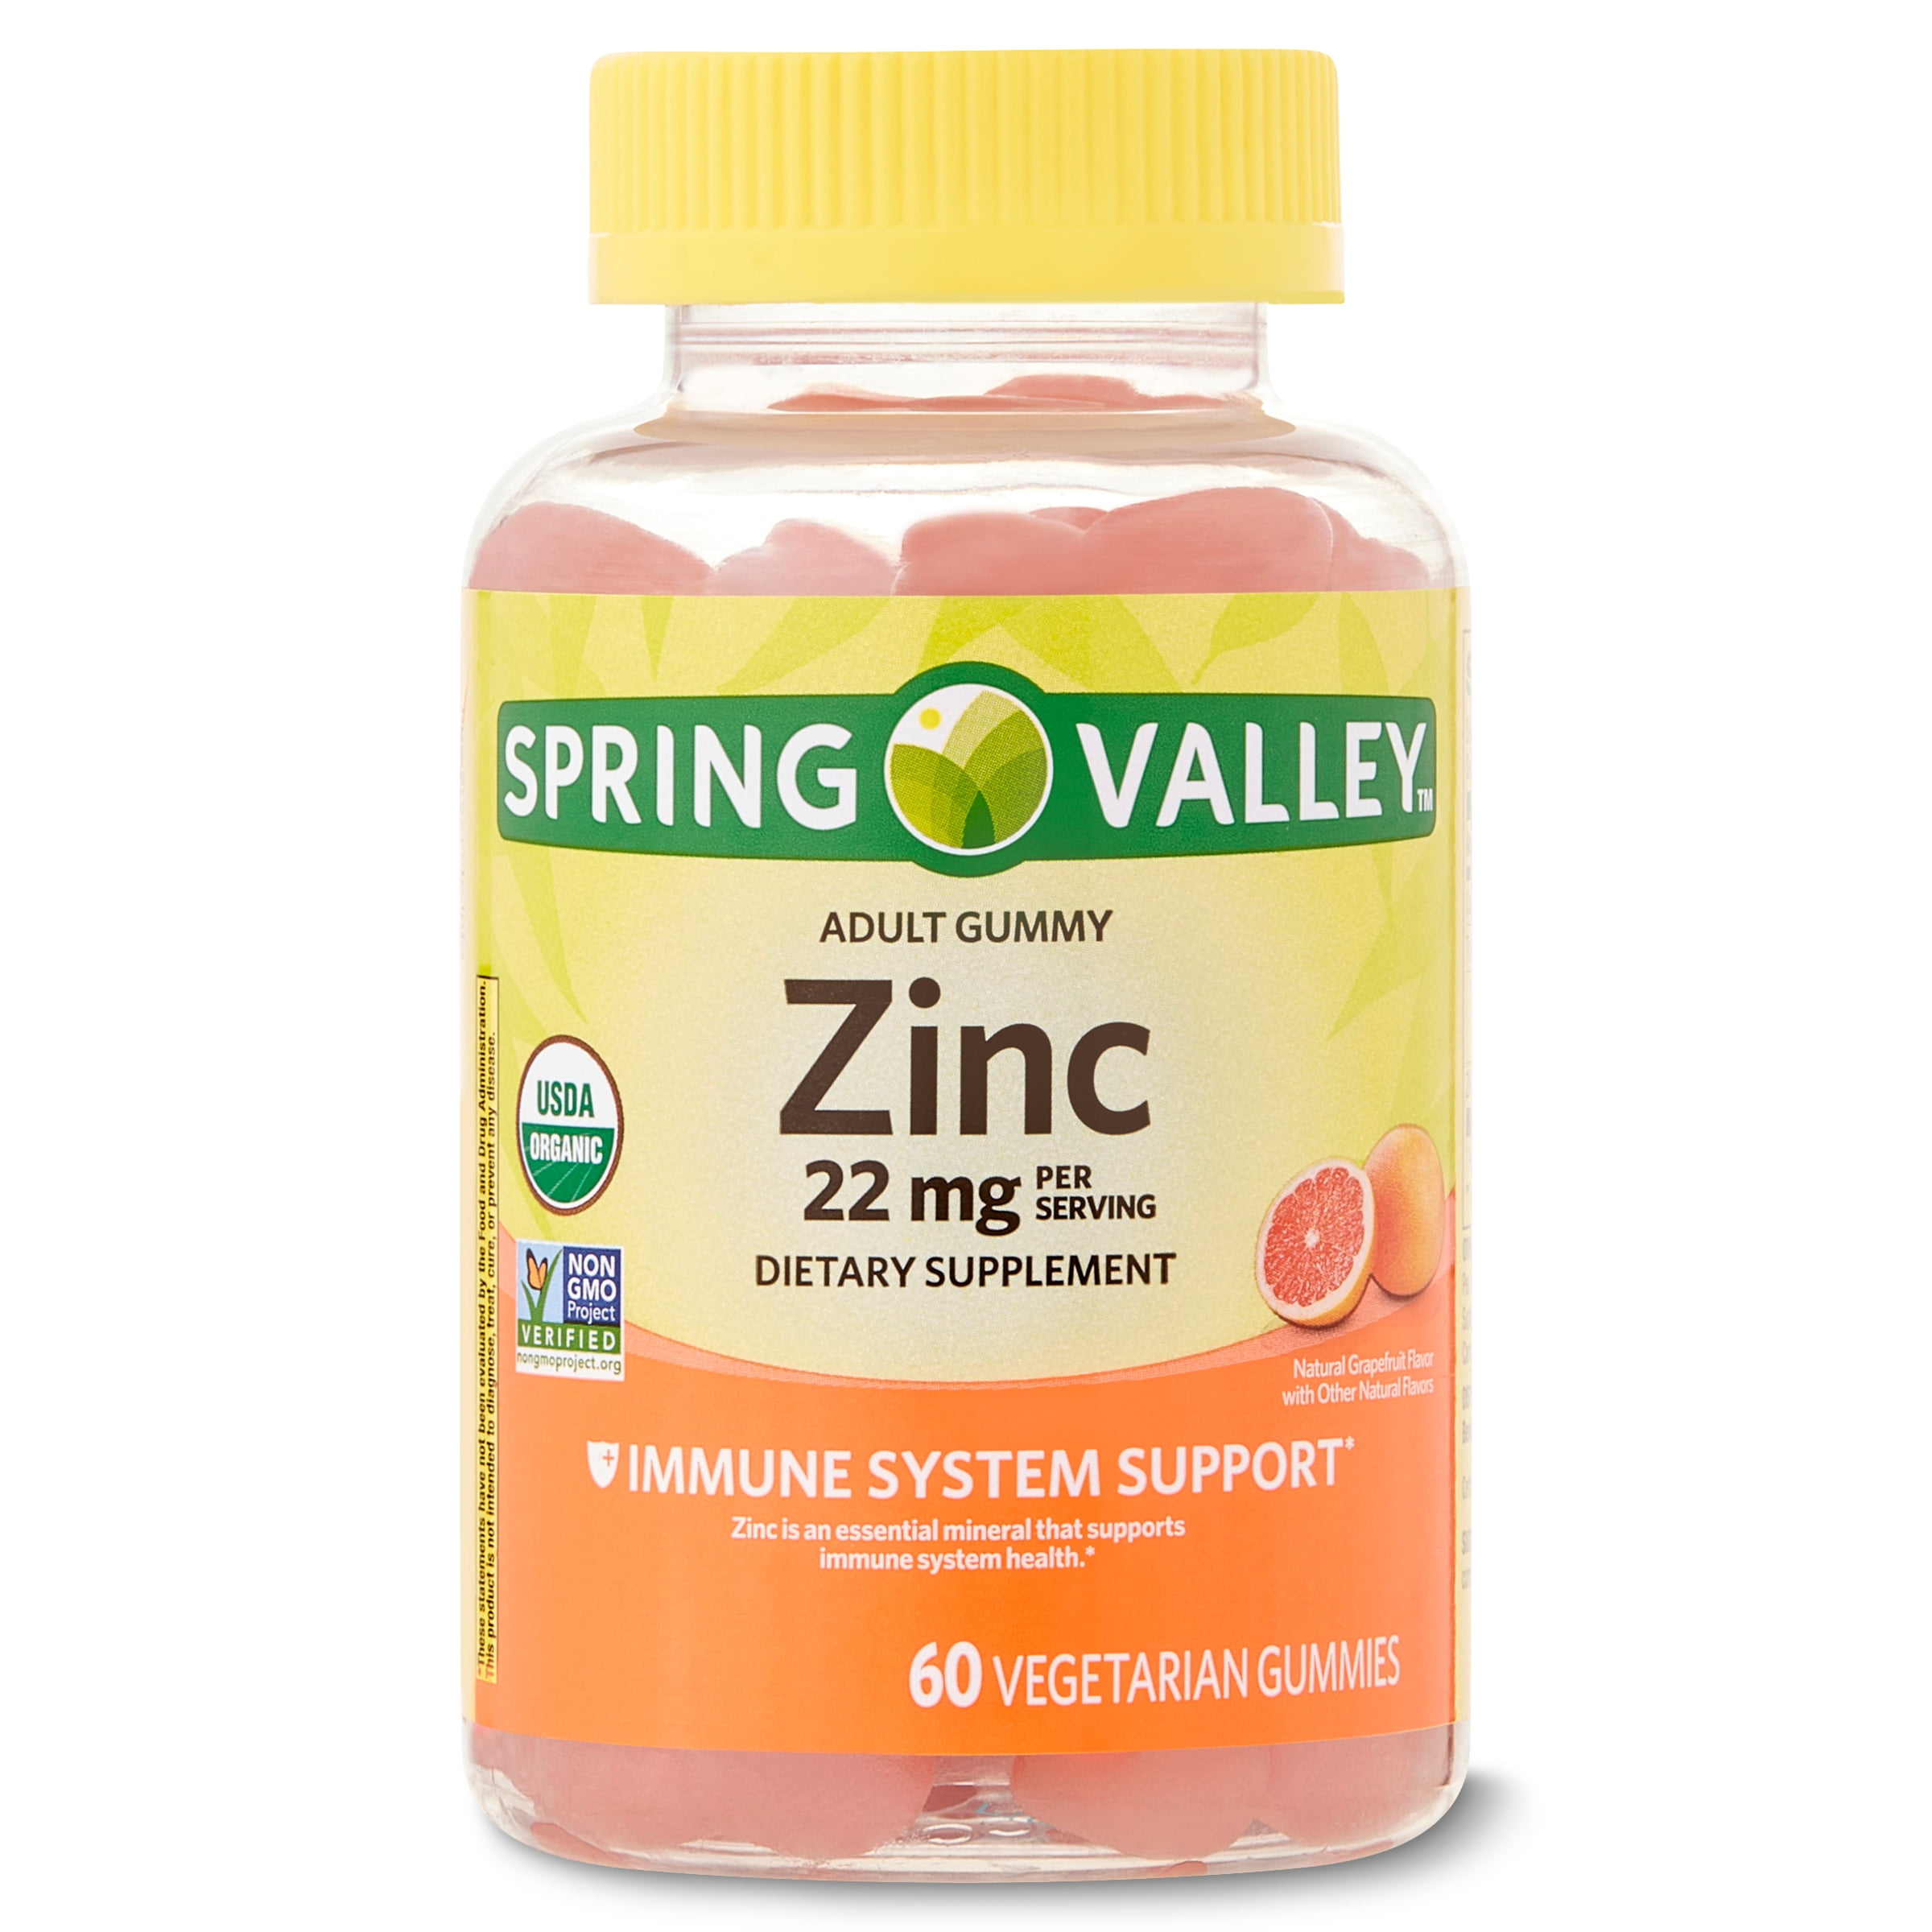 Spring Valley Zinc 22mg Organic Vegetarian Gummies, 60 Count